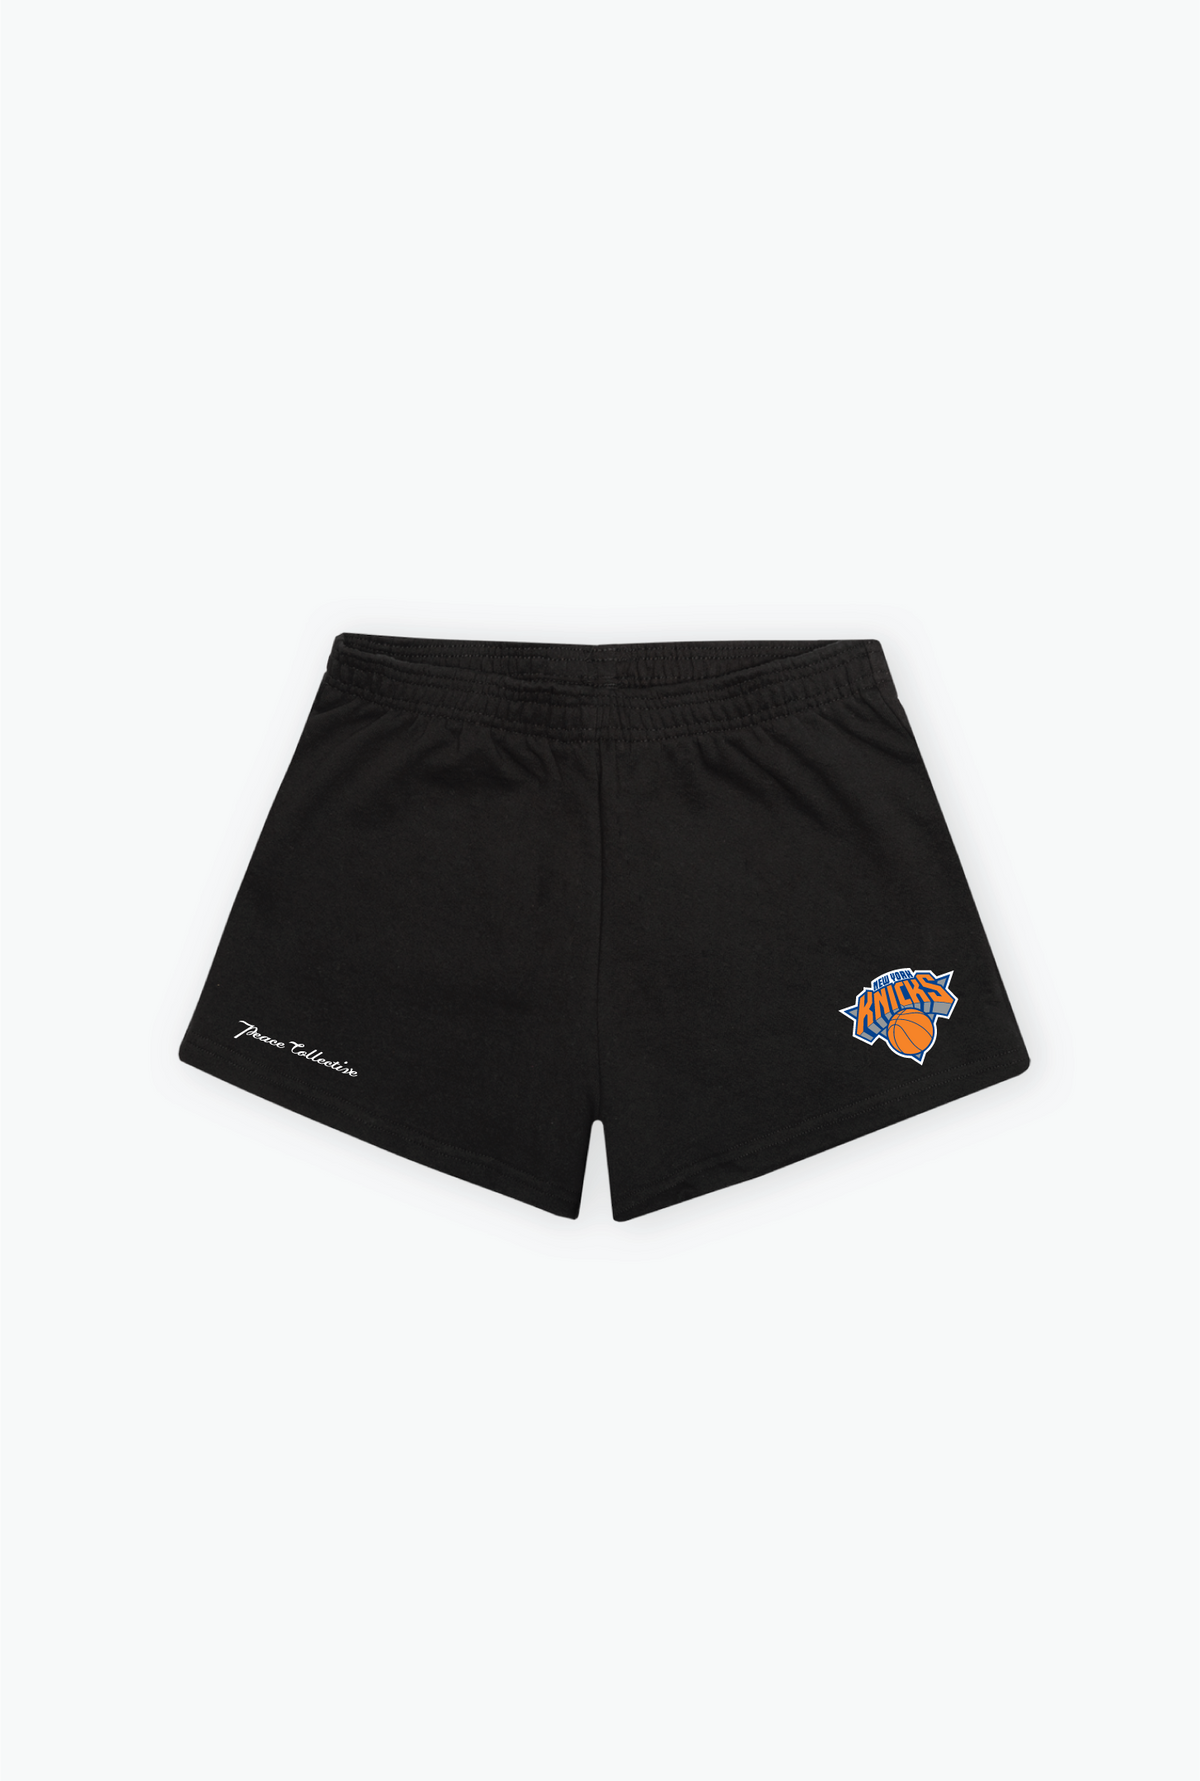 New York Knicks Women's Fleece Shorts - Black